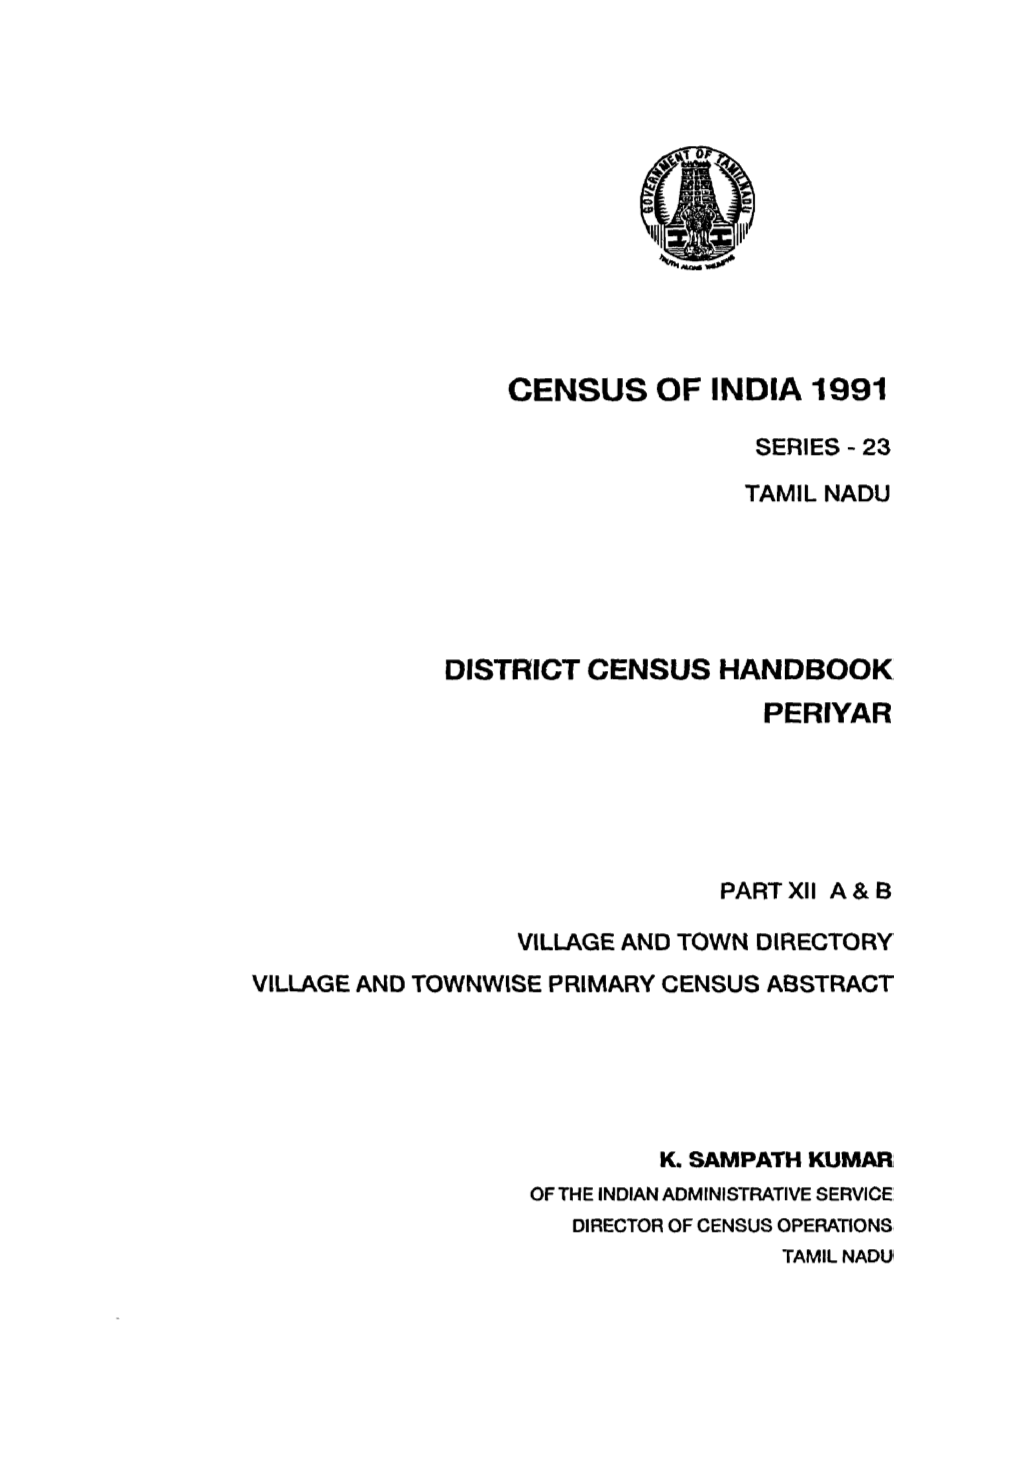 District Census Handbook, Periyar, Part XII-A & B, Series-23